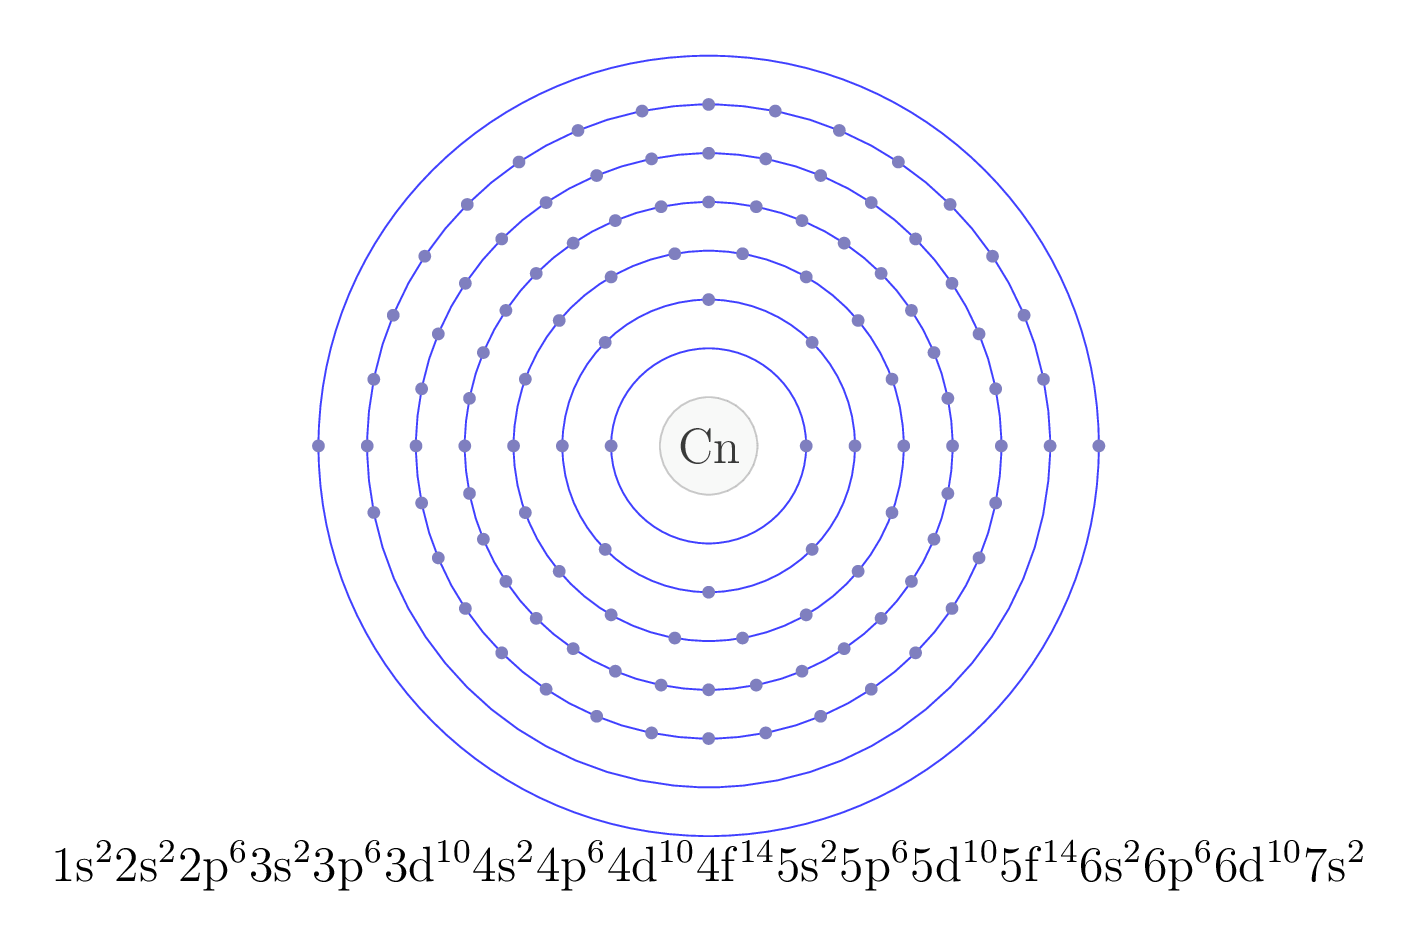 electron configuration of element Cn